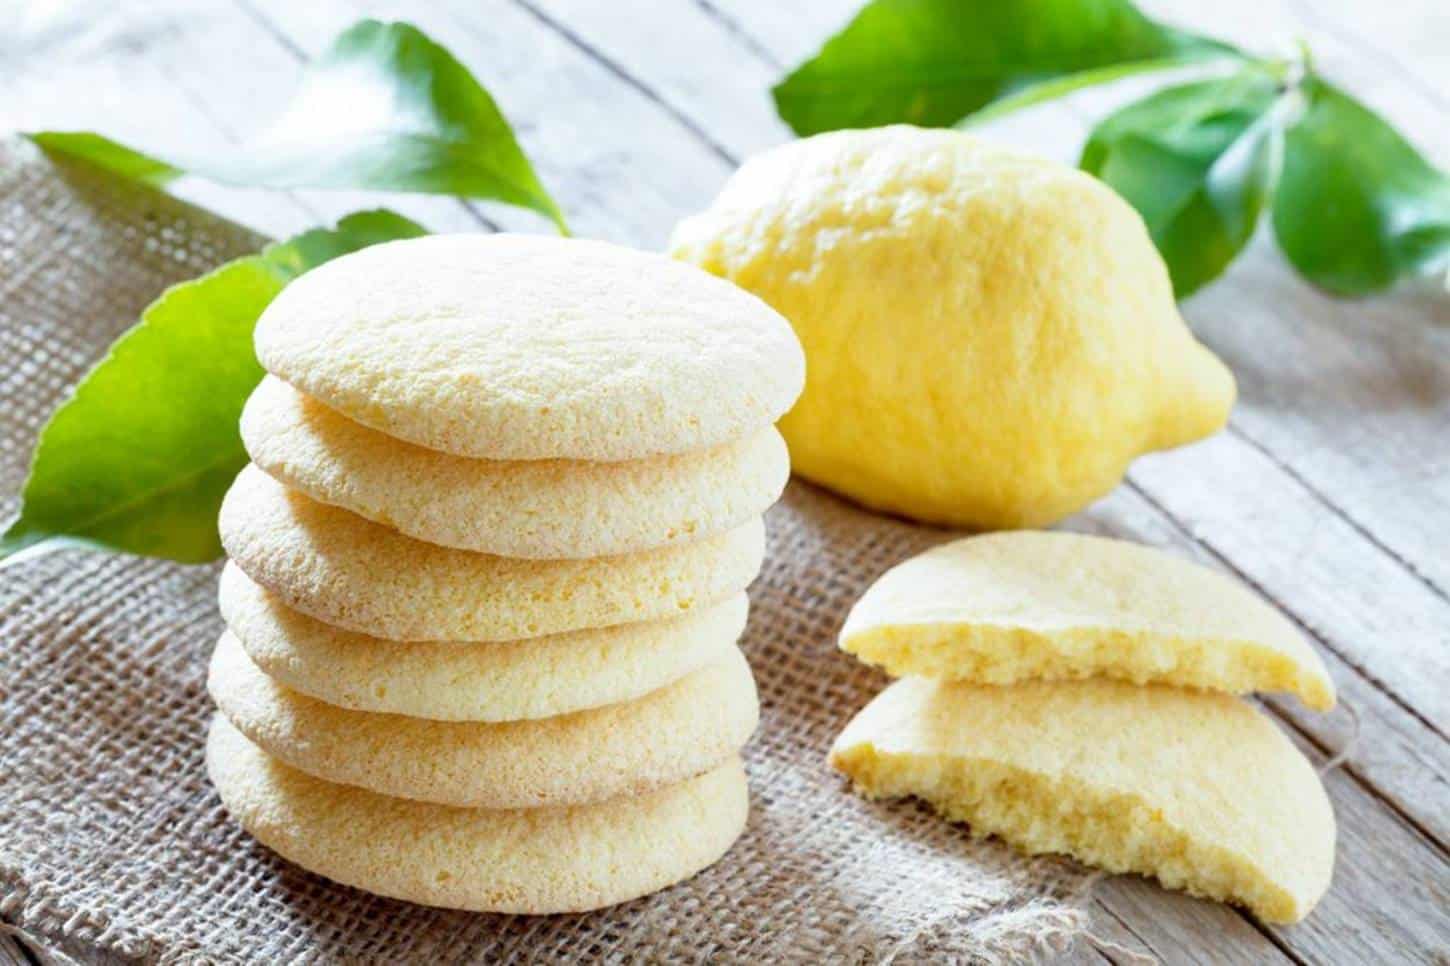 Prepare biscoitos de manteiga deliciosos que derretem na boca